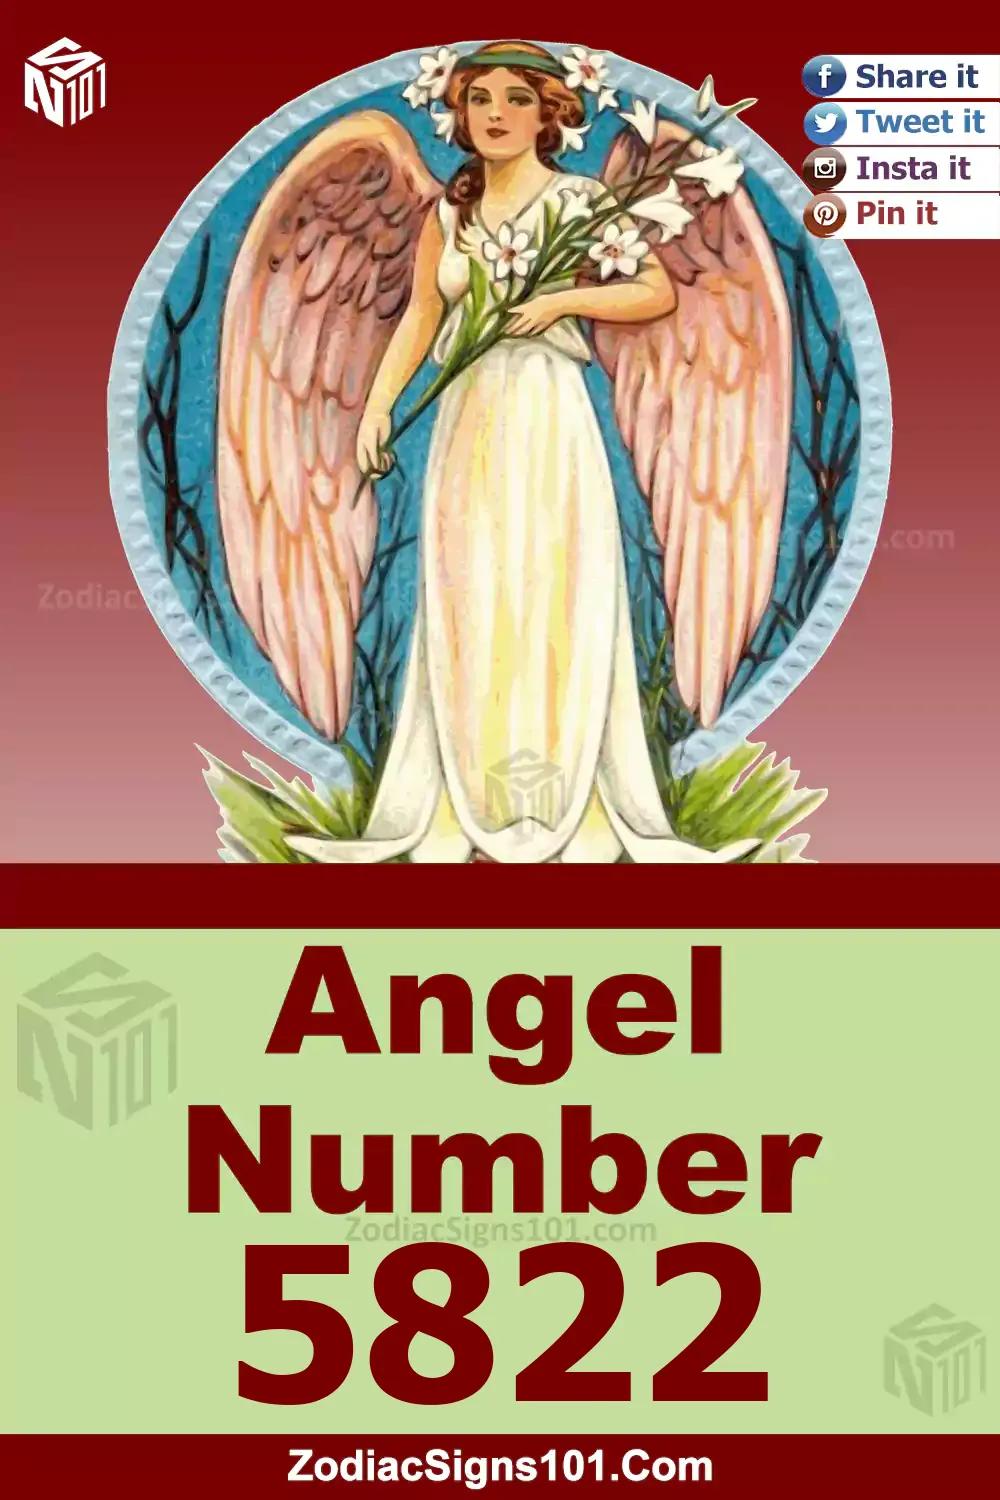 5822-Angel-Number-Meaning.jpg